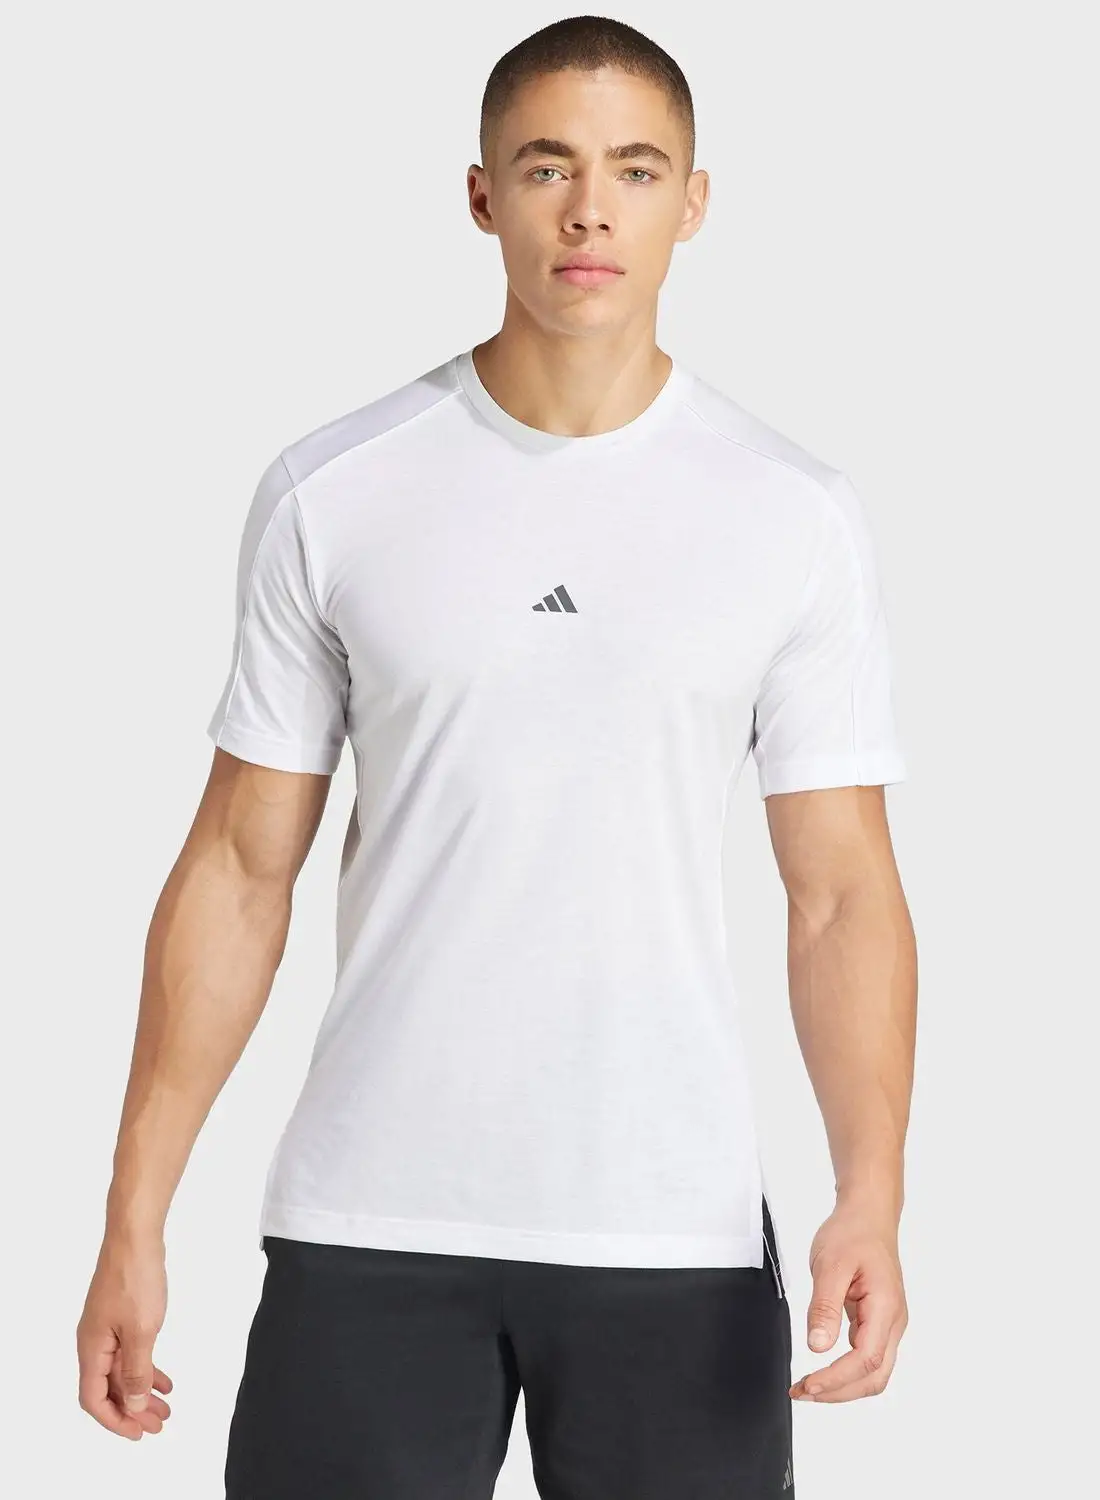 Adidas Logo Yoga T-Shirt